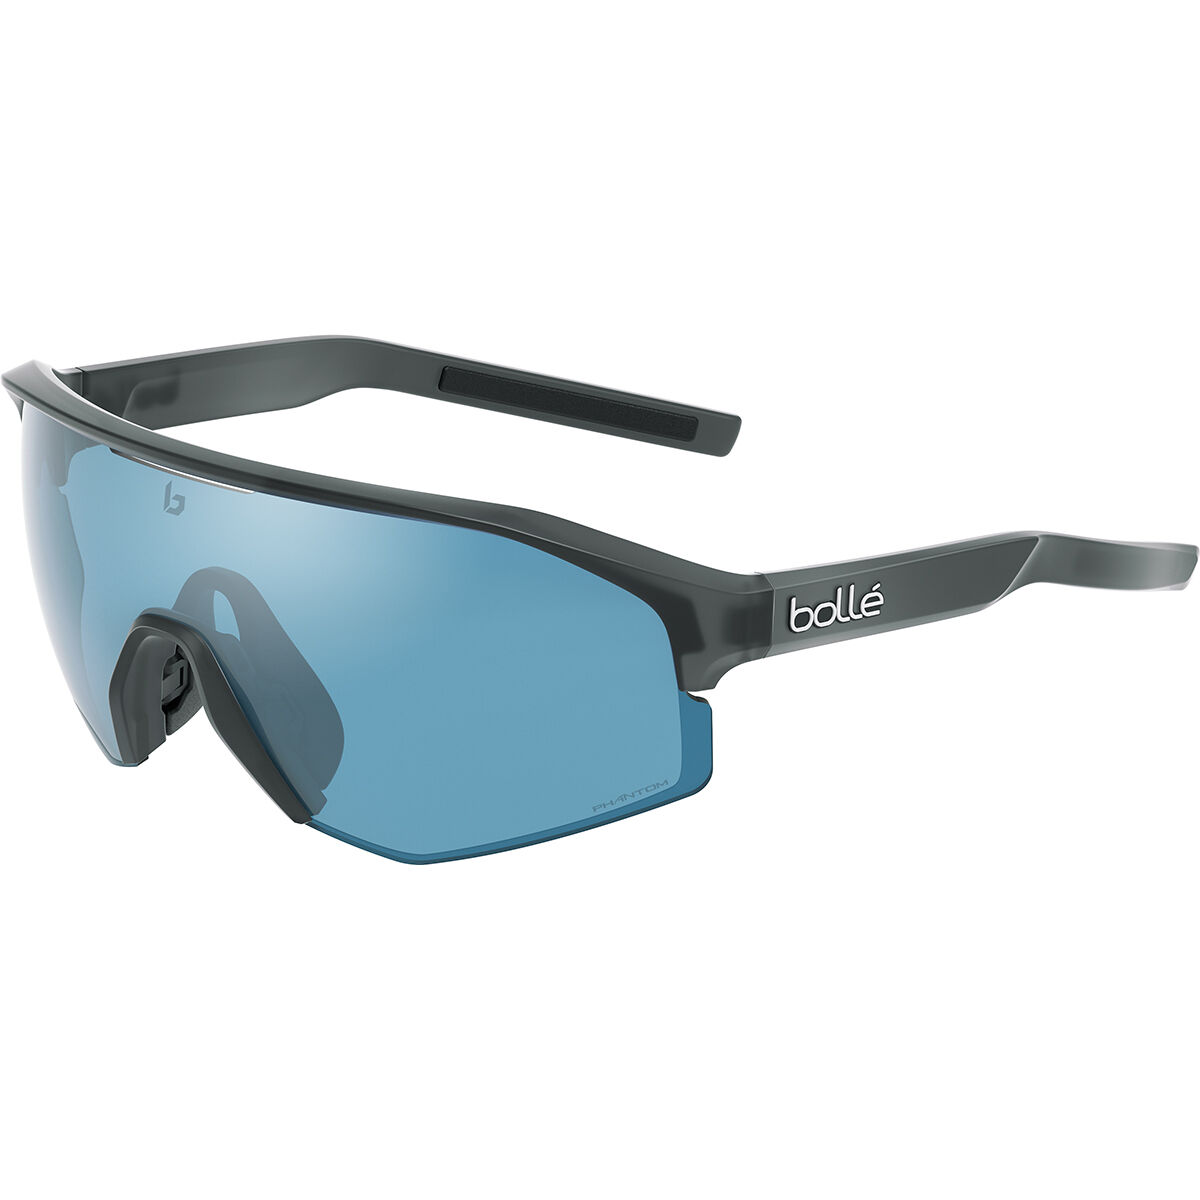 Bollé LIGHTSHIFTER XL Cycling Sunglasses - Photochromic Lenses